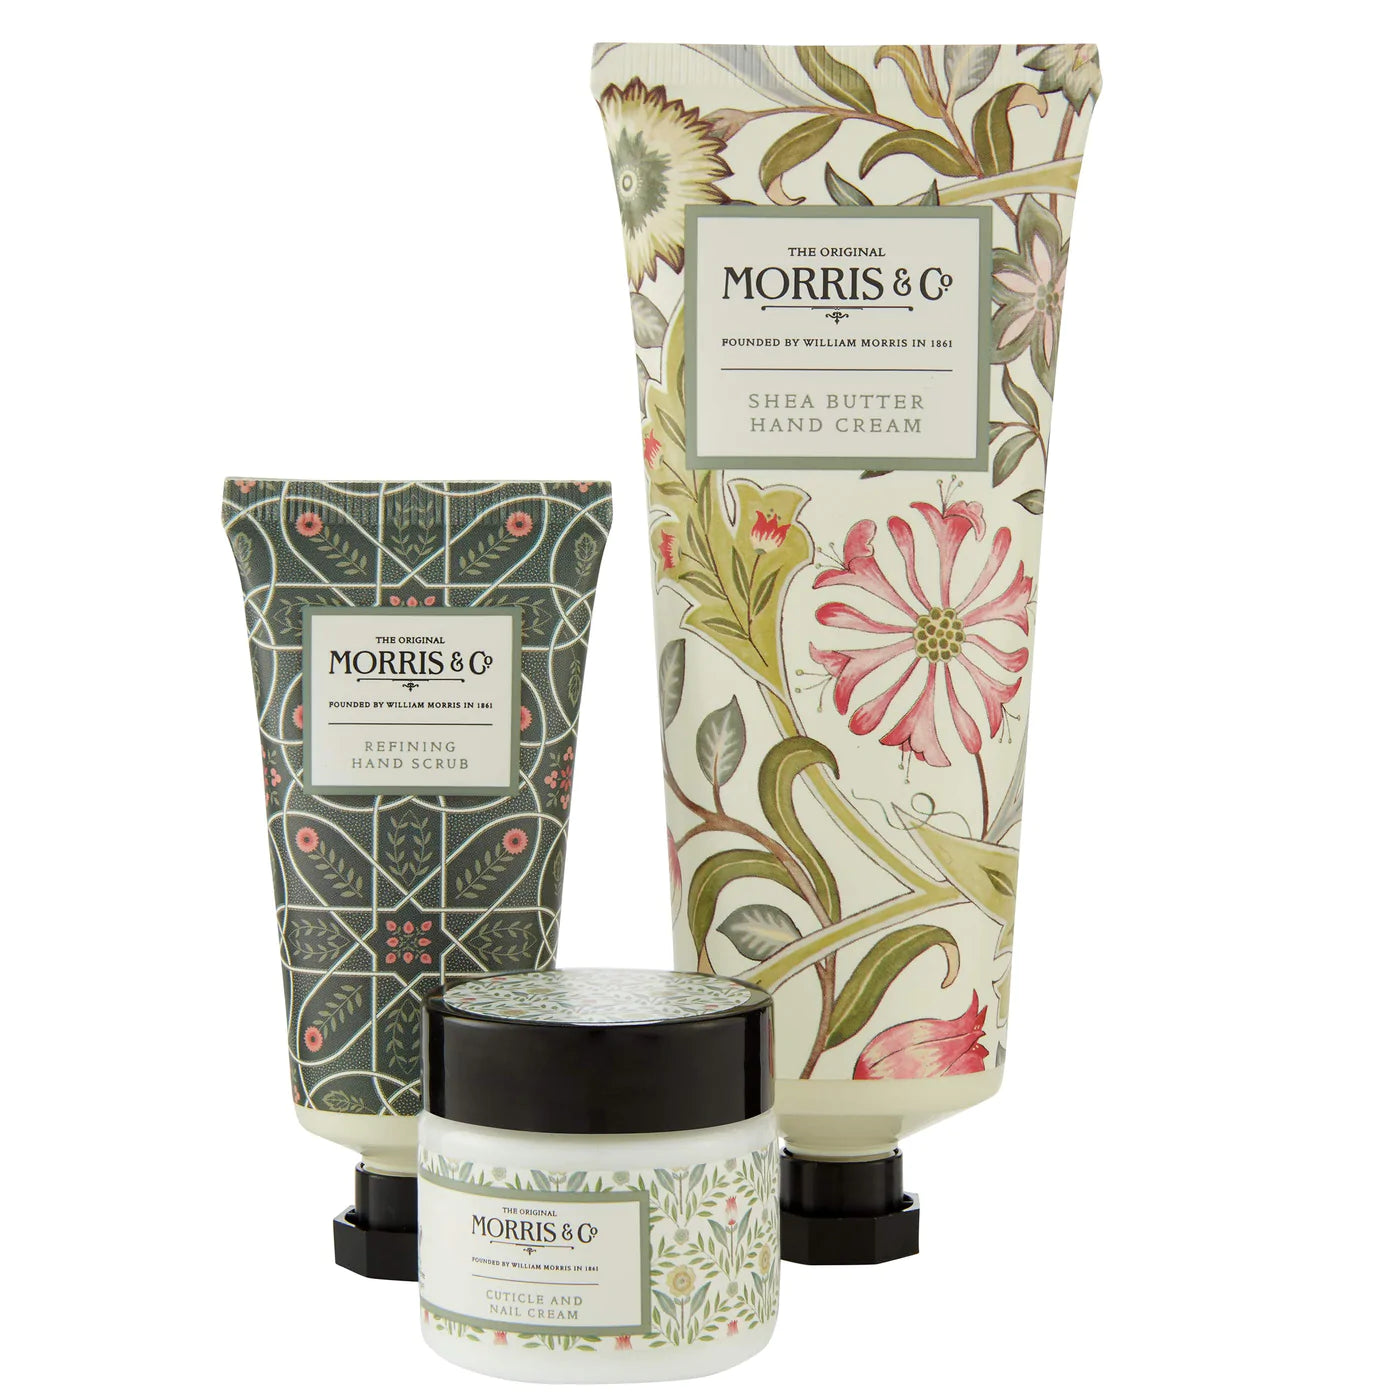 Morris & Co. Beauty Jasmine and Green Tea Hand Care Treats Gift Set